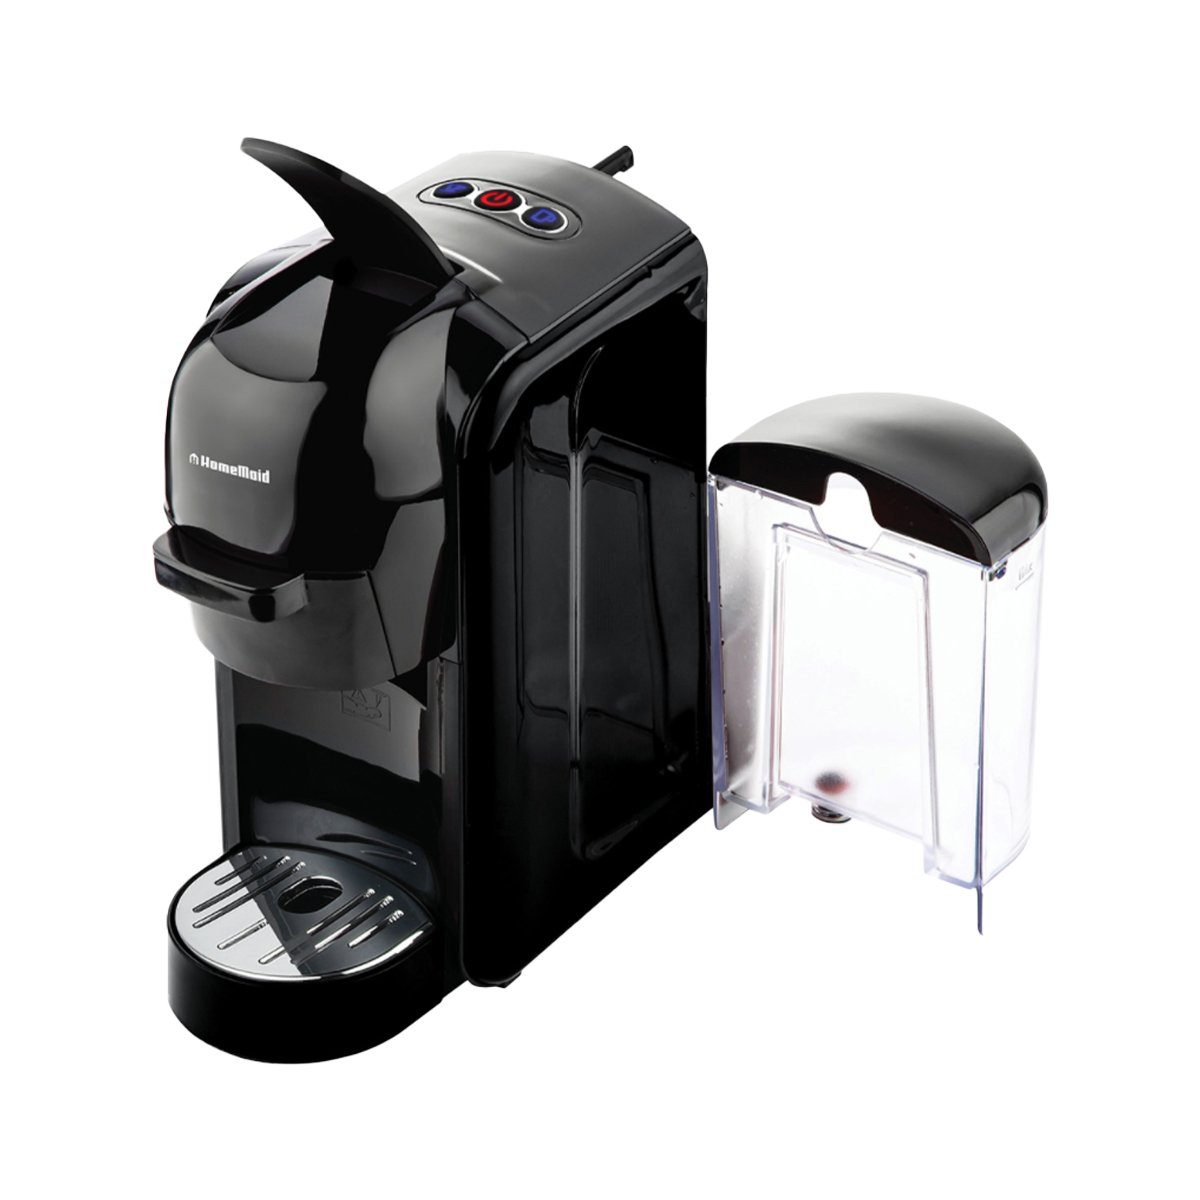 kitchen Homemaid 3-in-1 coffee machine